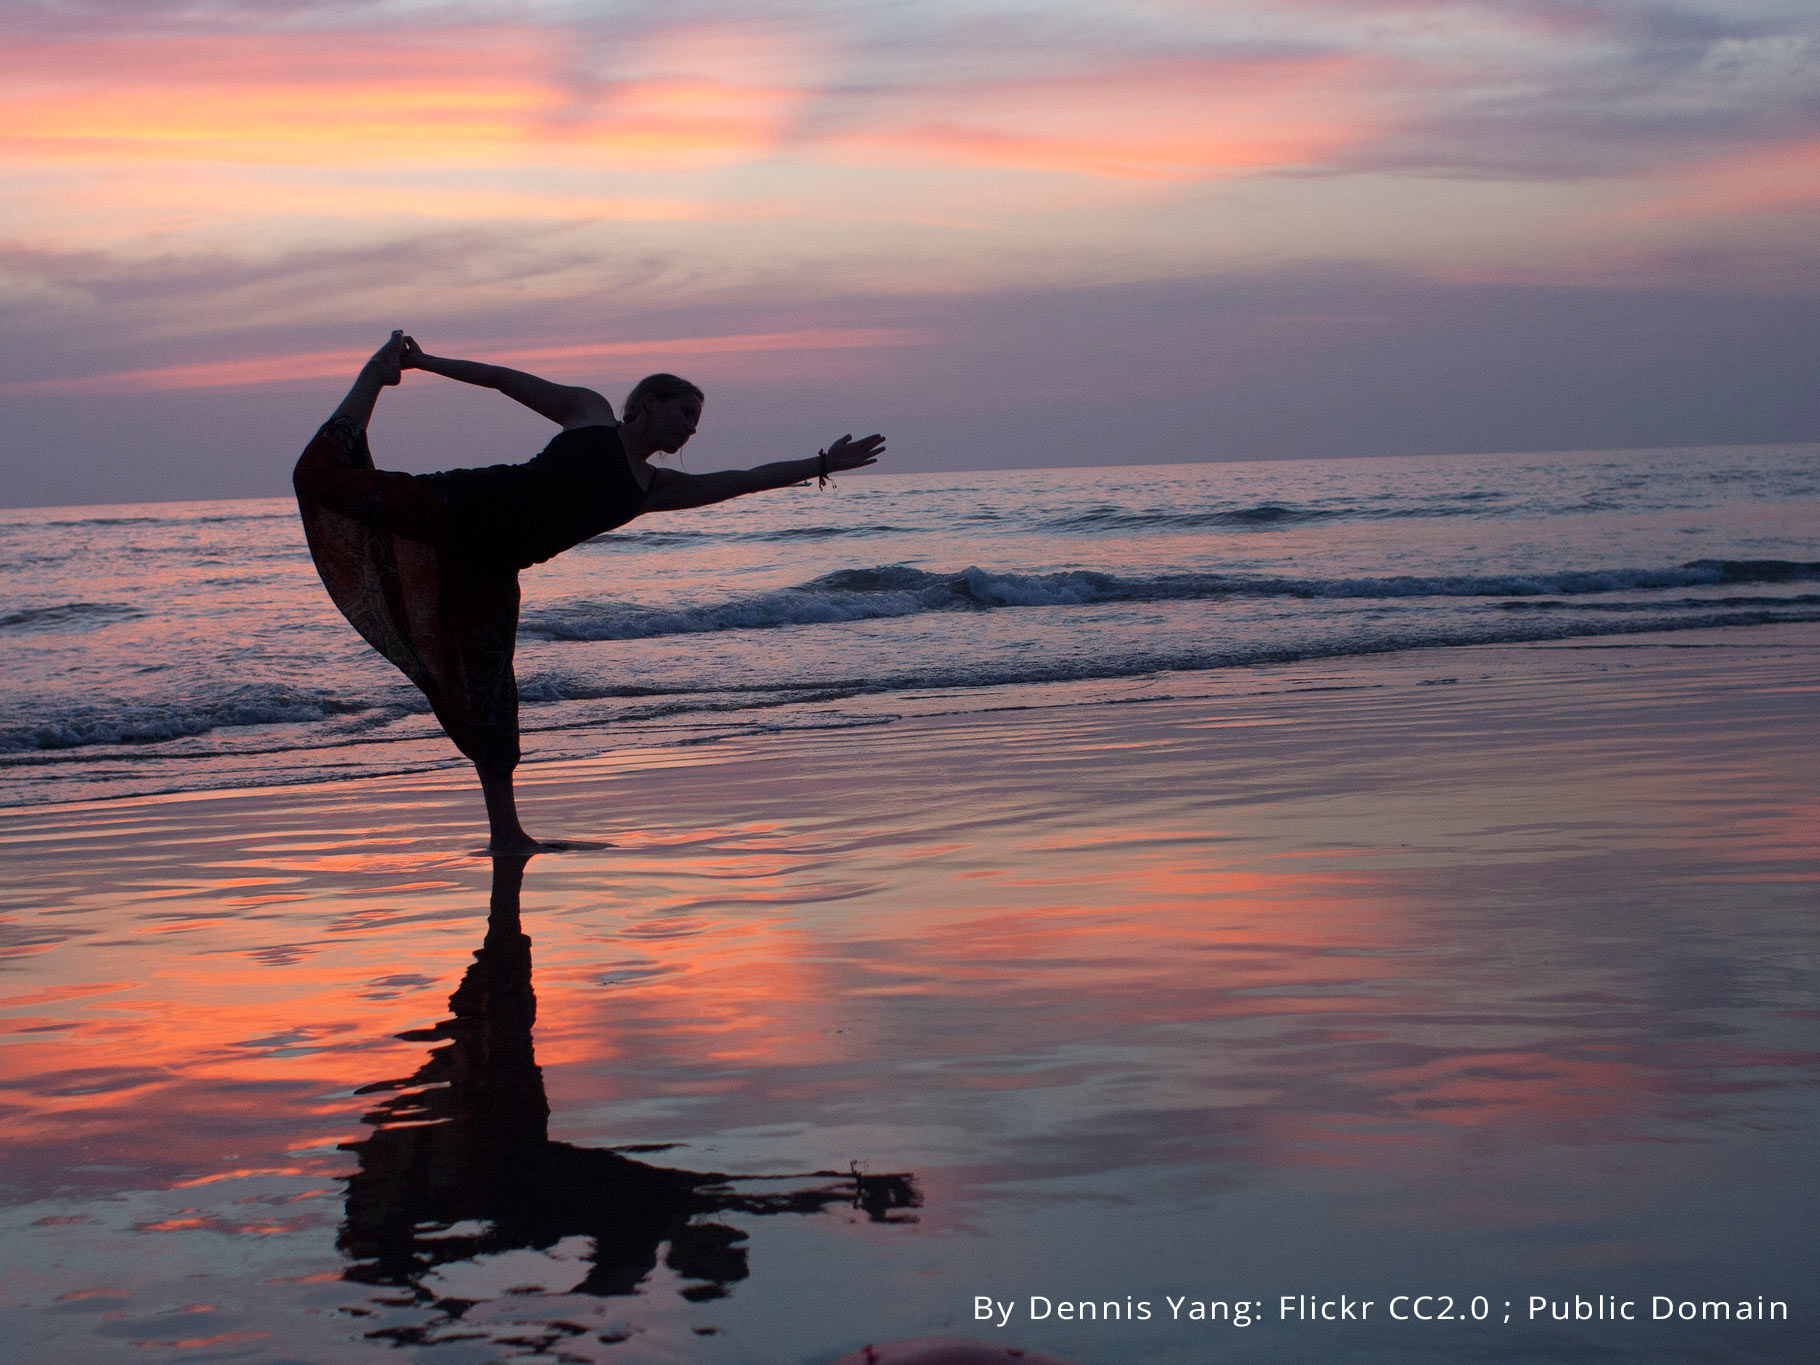 Things to do in Goa - Watch the sun set along a beach